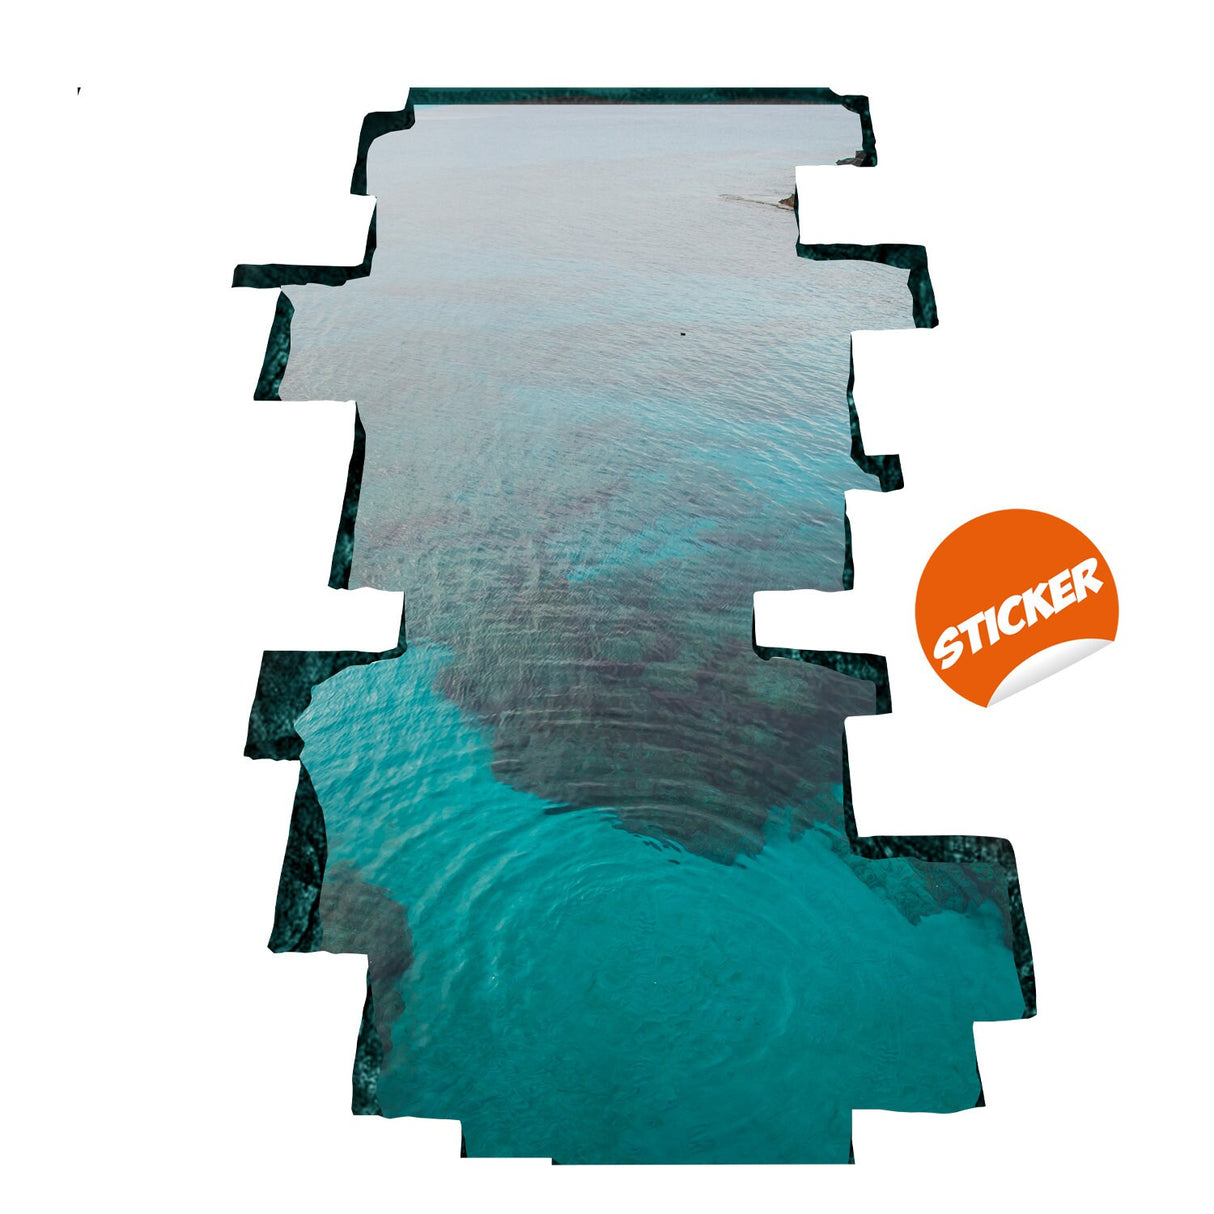 3d Floor Ocean Vinyl Sticker - Porthole Effect Decor Art Decal